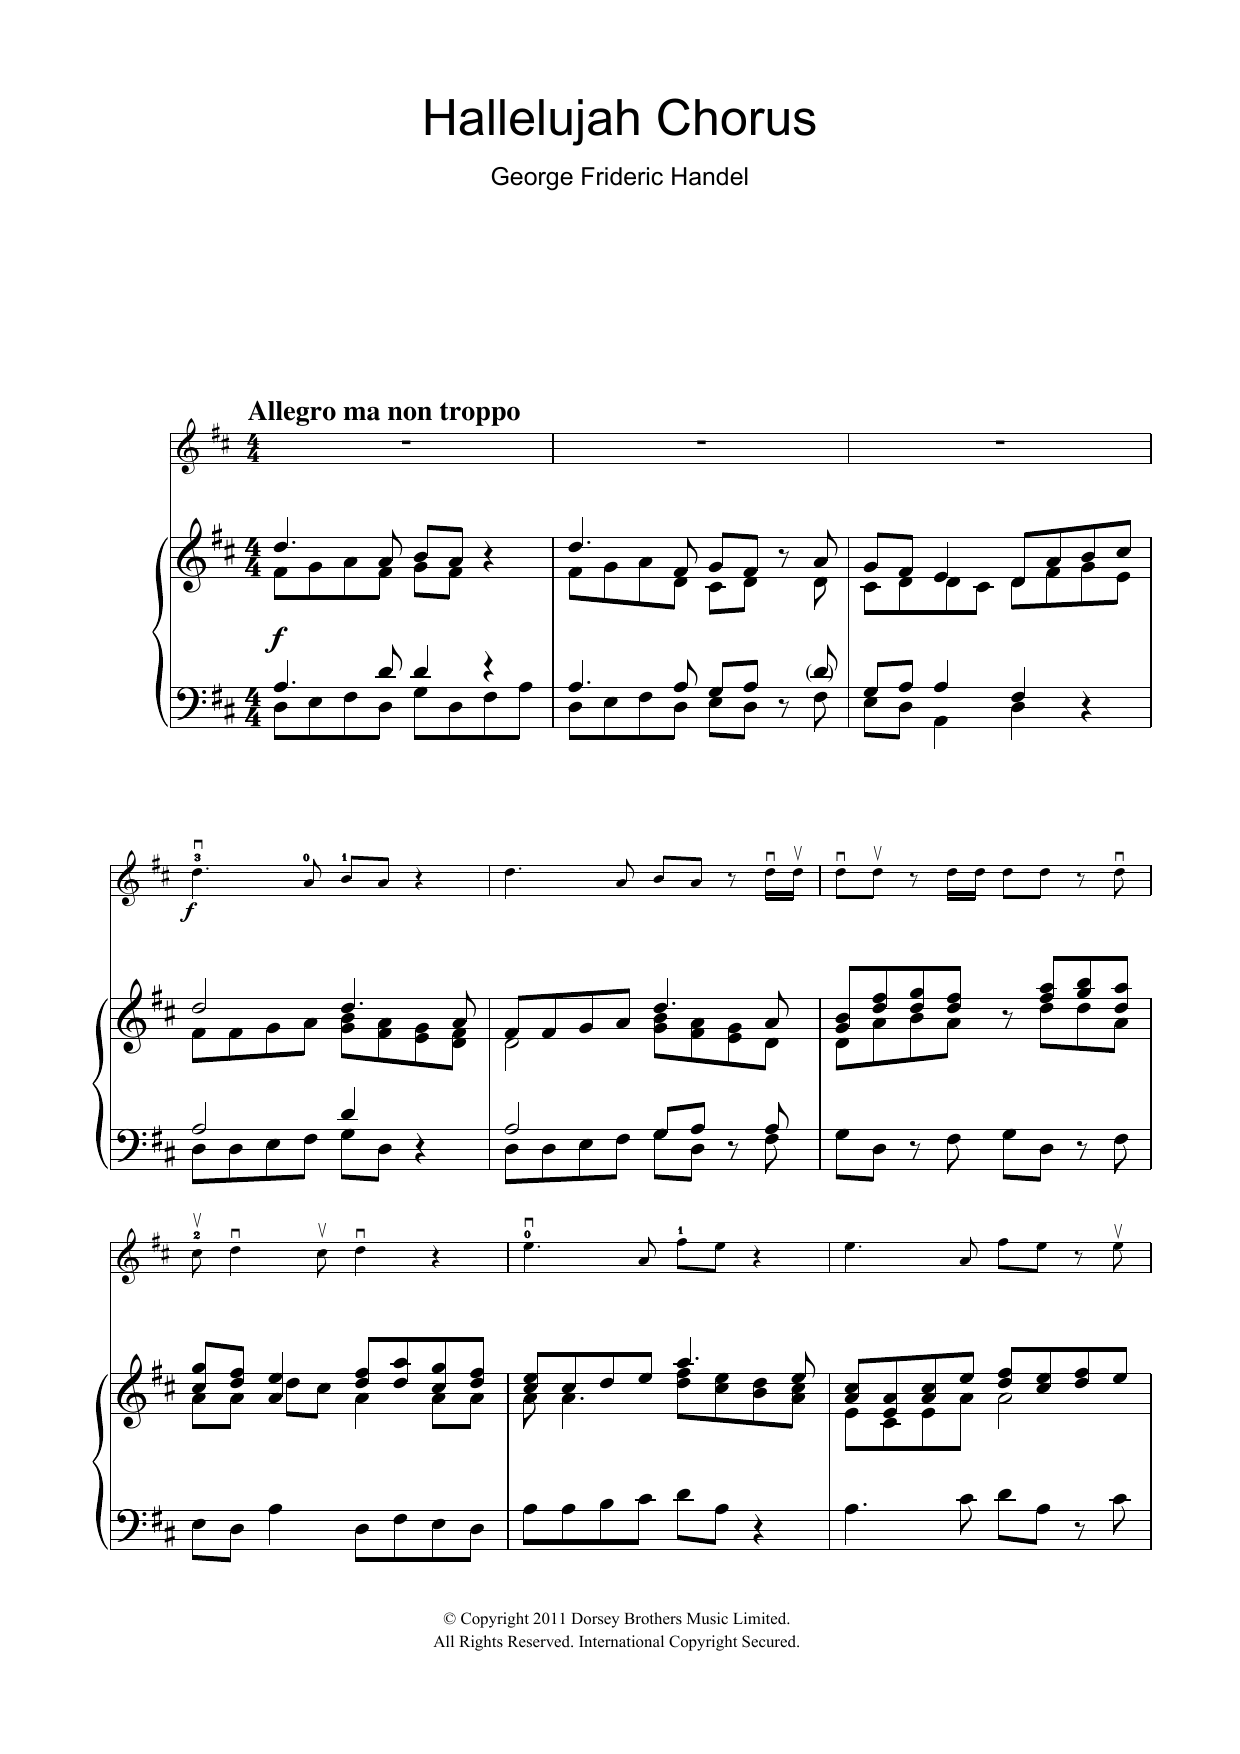 Download George Frideric Handel Hallelujah Chorus (from The Messiah) Sheet Music